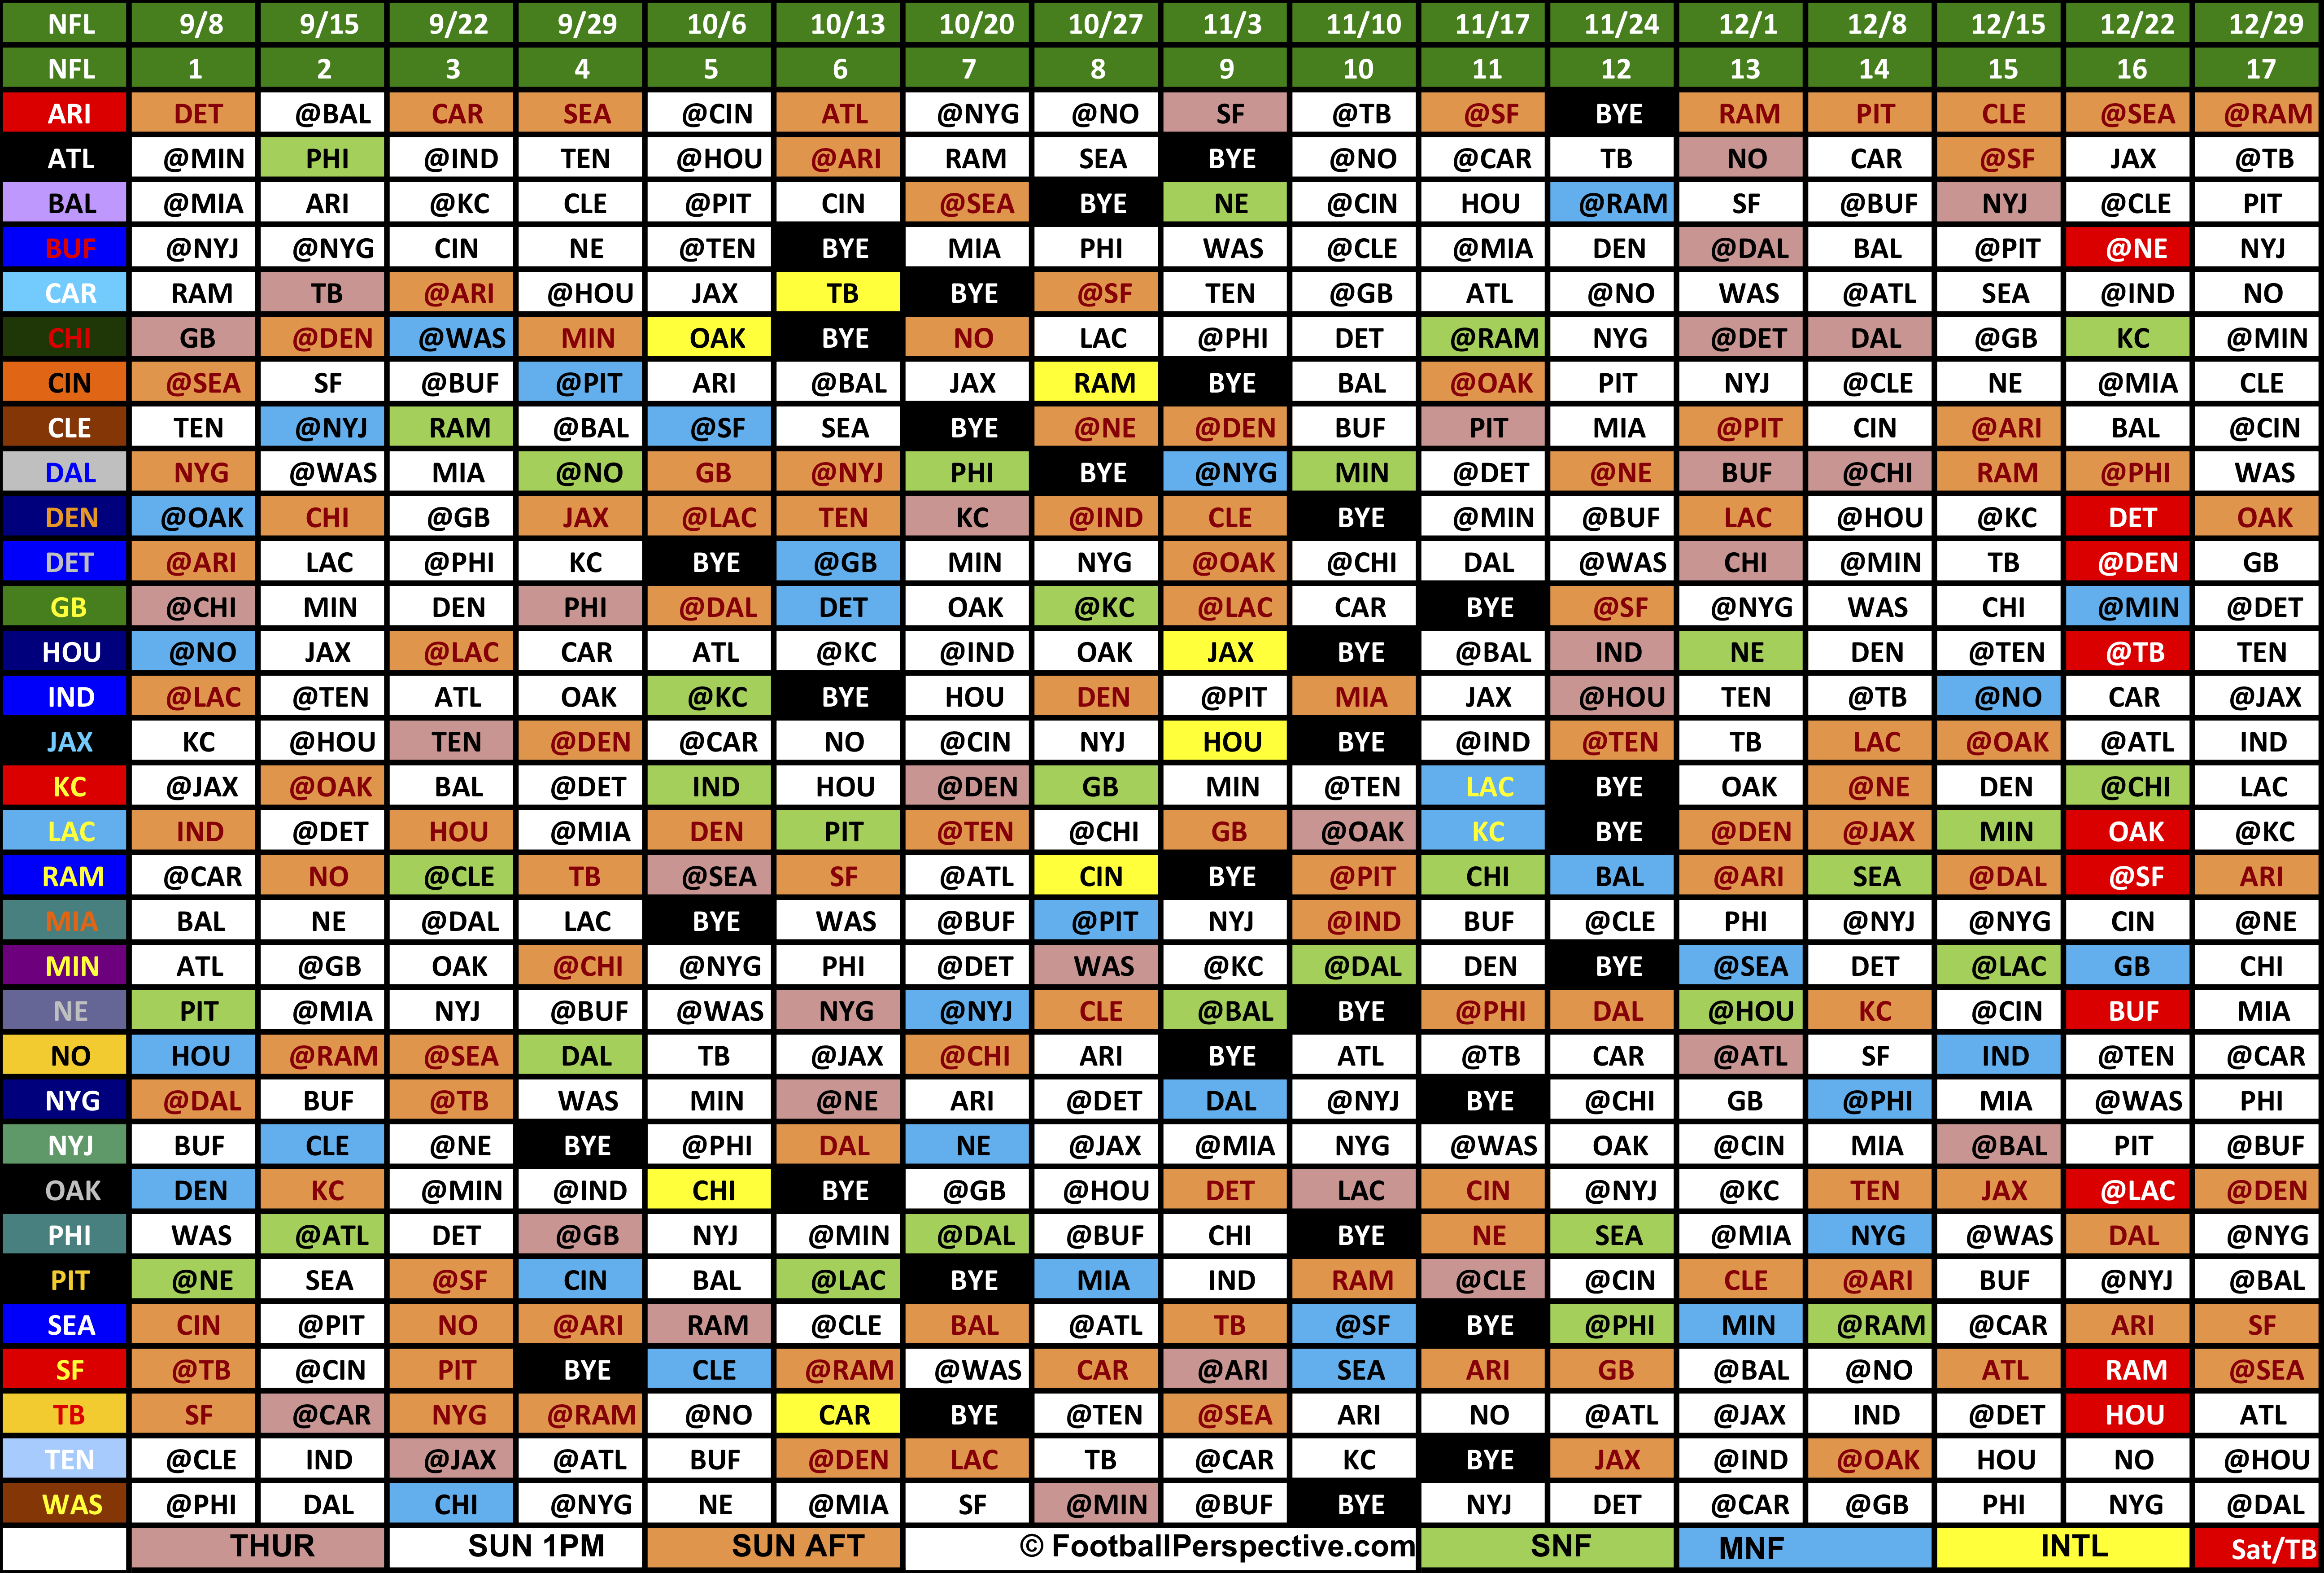 The 2019 NFL Schedule